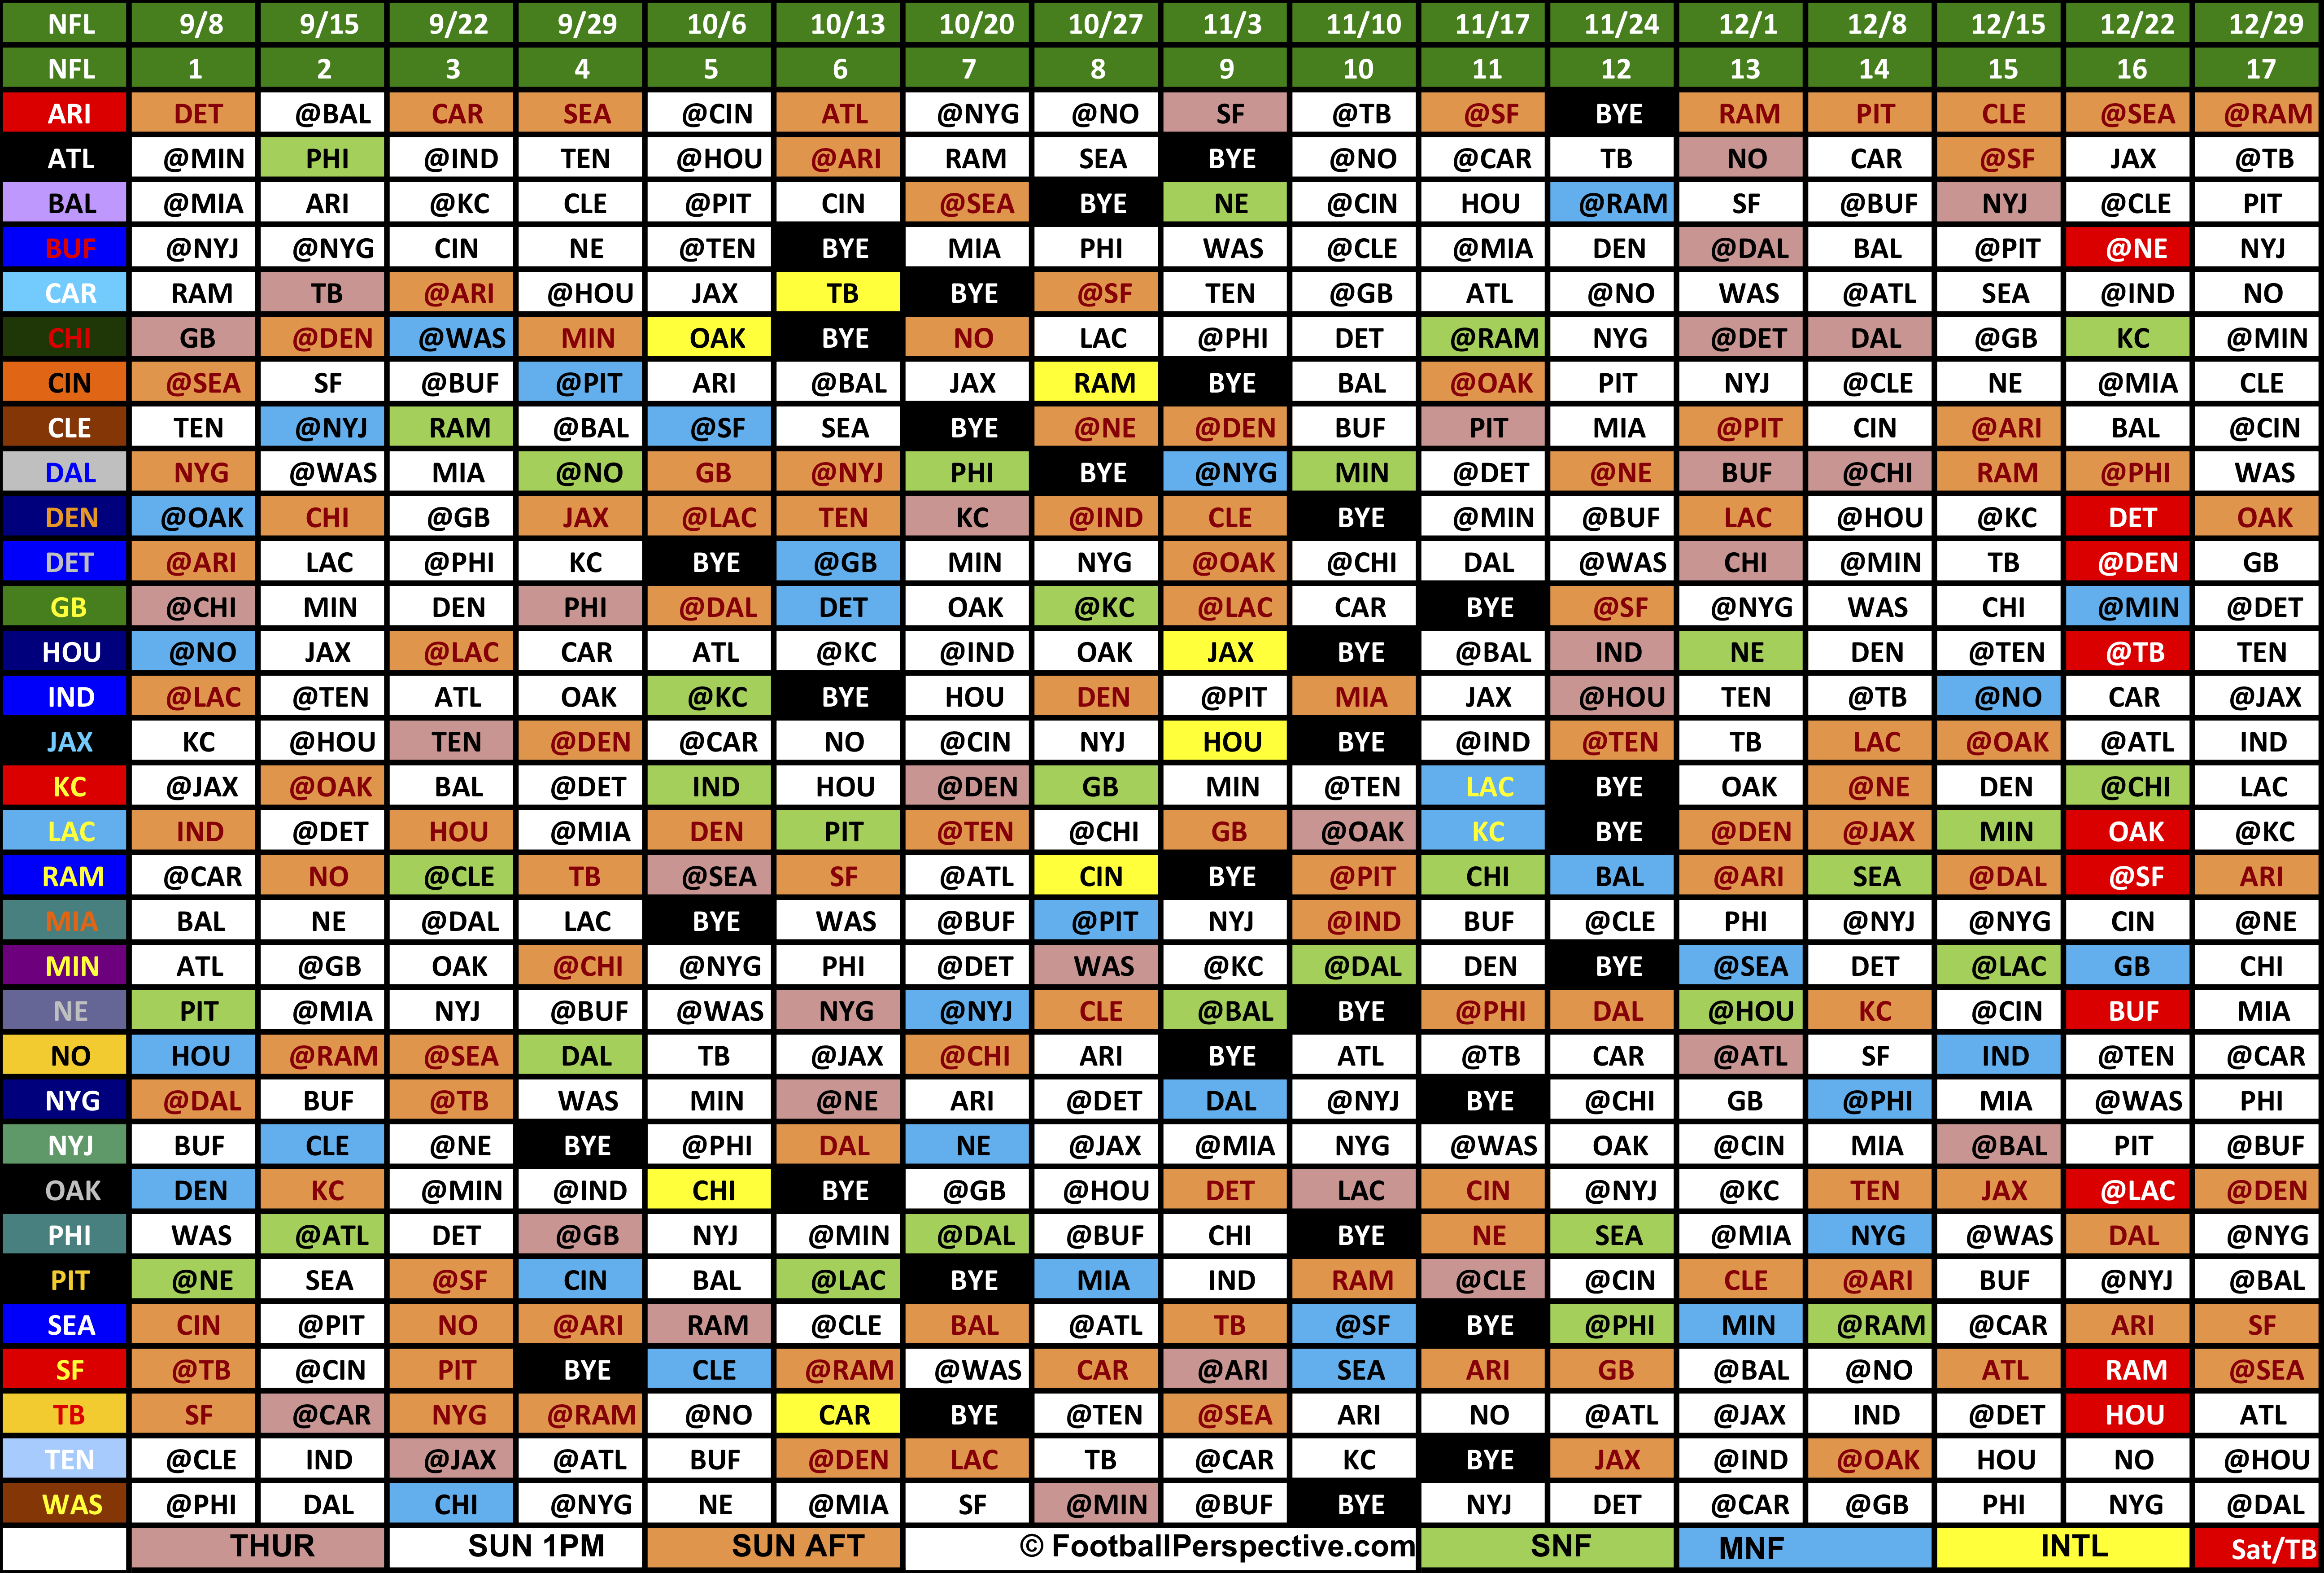 The 2019 NFL Schedule